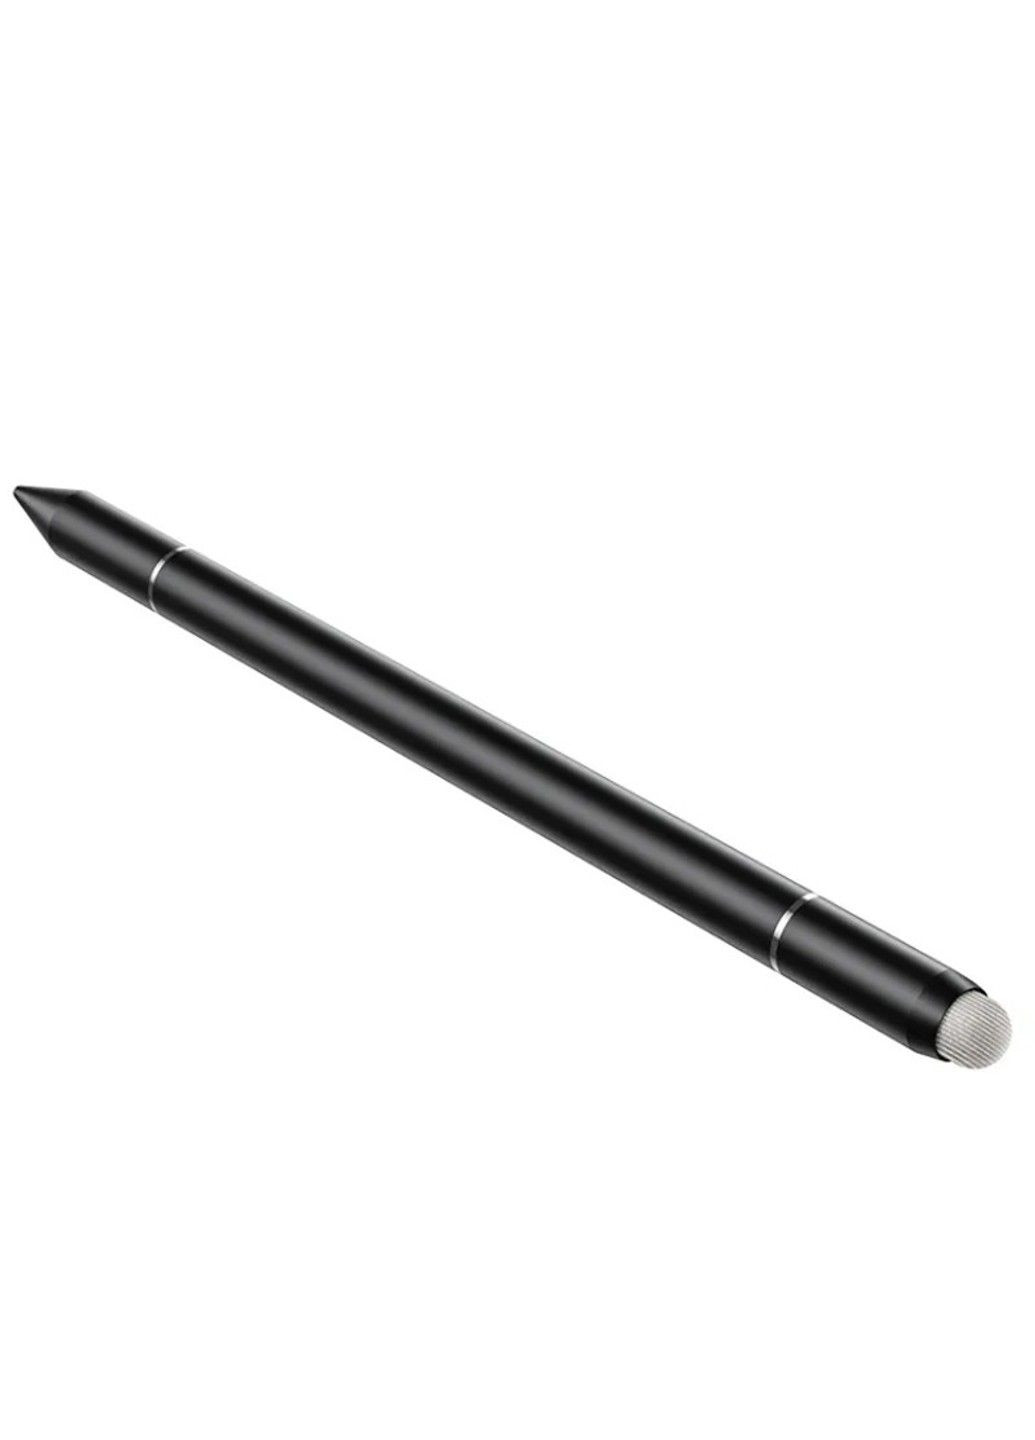 Стилус GM111 Cool Dynamic series 3in1 Passive Universal Capacitive Pen Hoco (294722652)